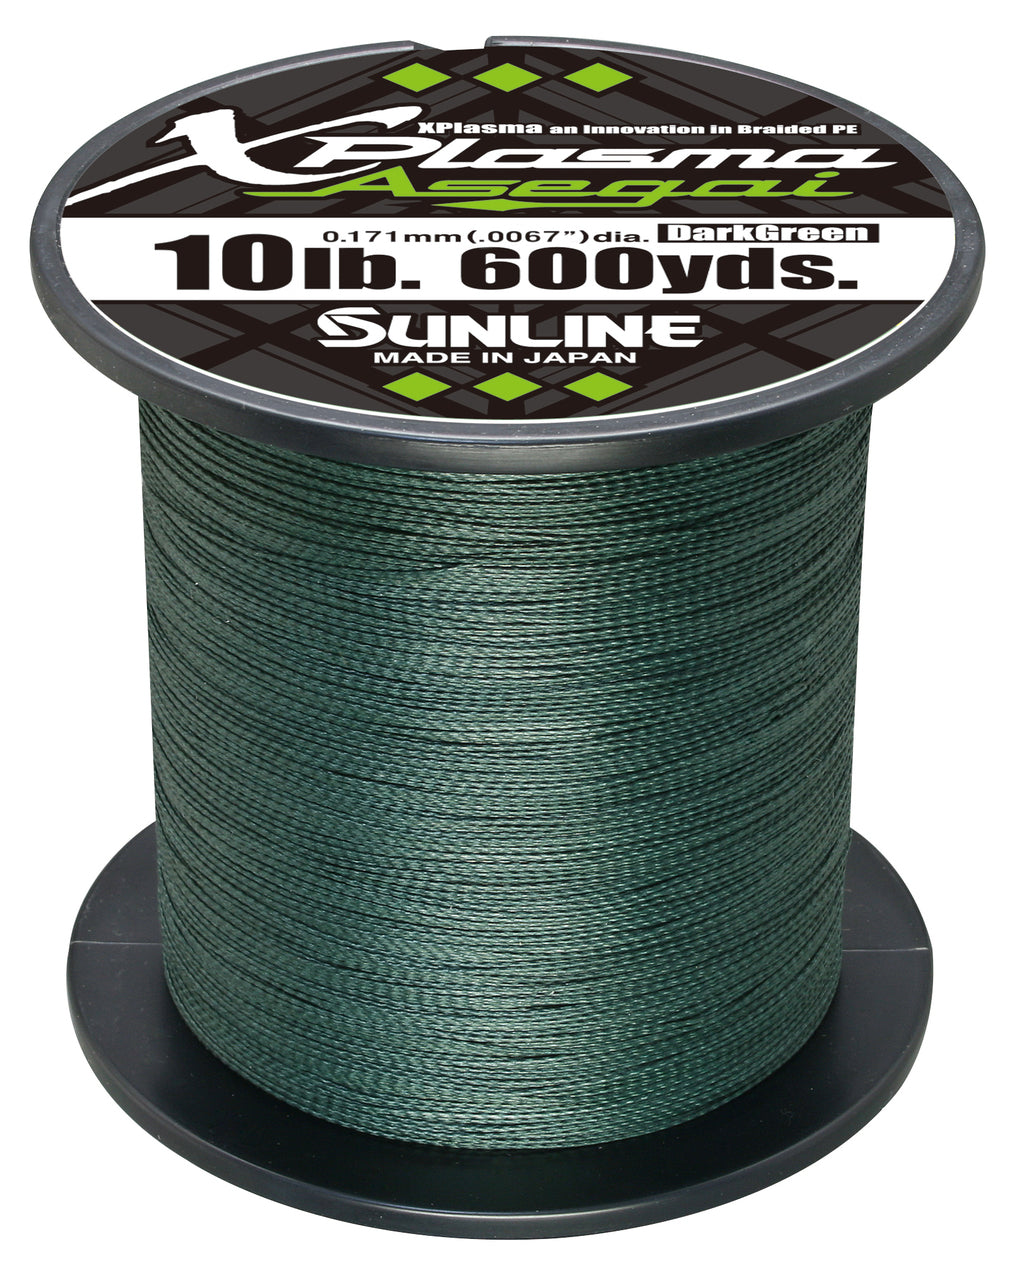 Sunline Xplasma Asegai Green Braided Line 600 Yards — Discount Tackle